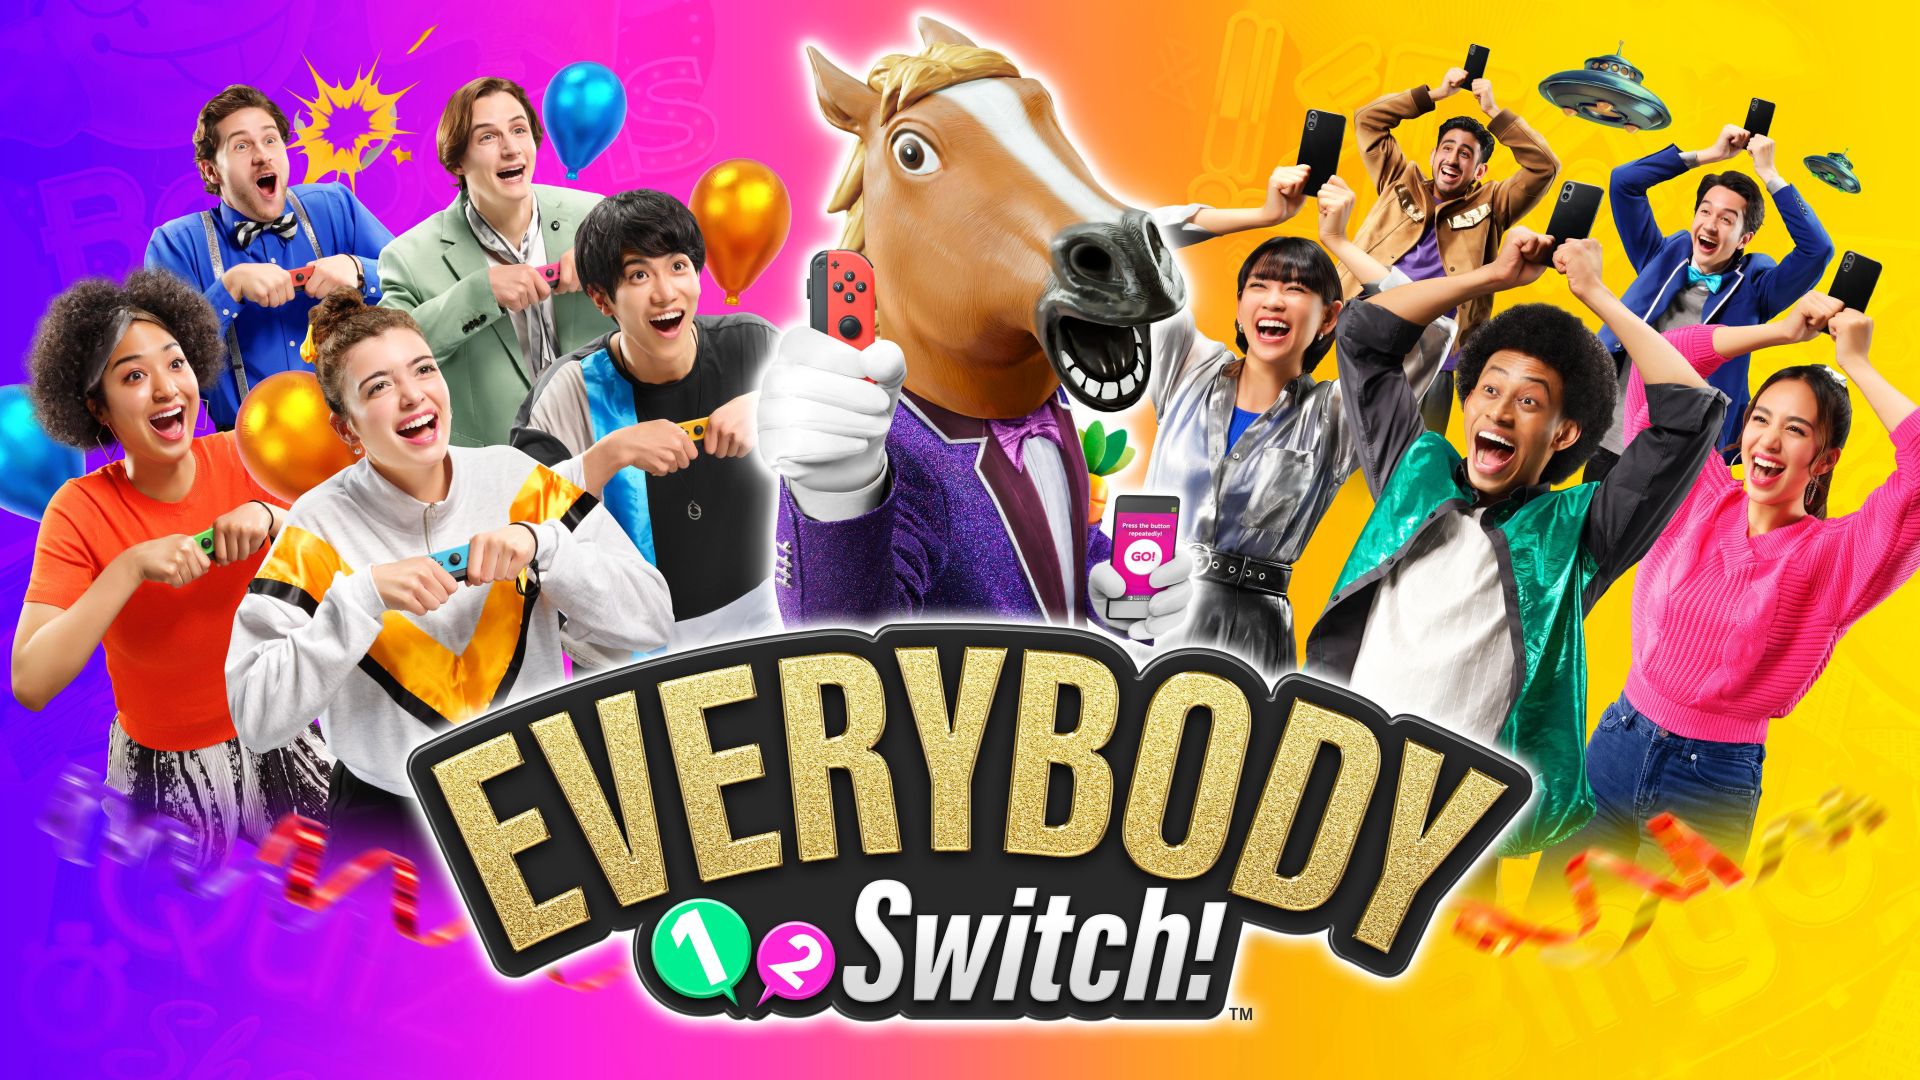 Everybody 1-2-Switch! Trailer Showcases Gameplay, Party Shenanigans